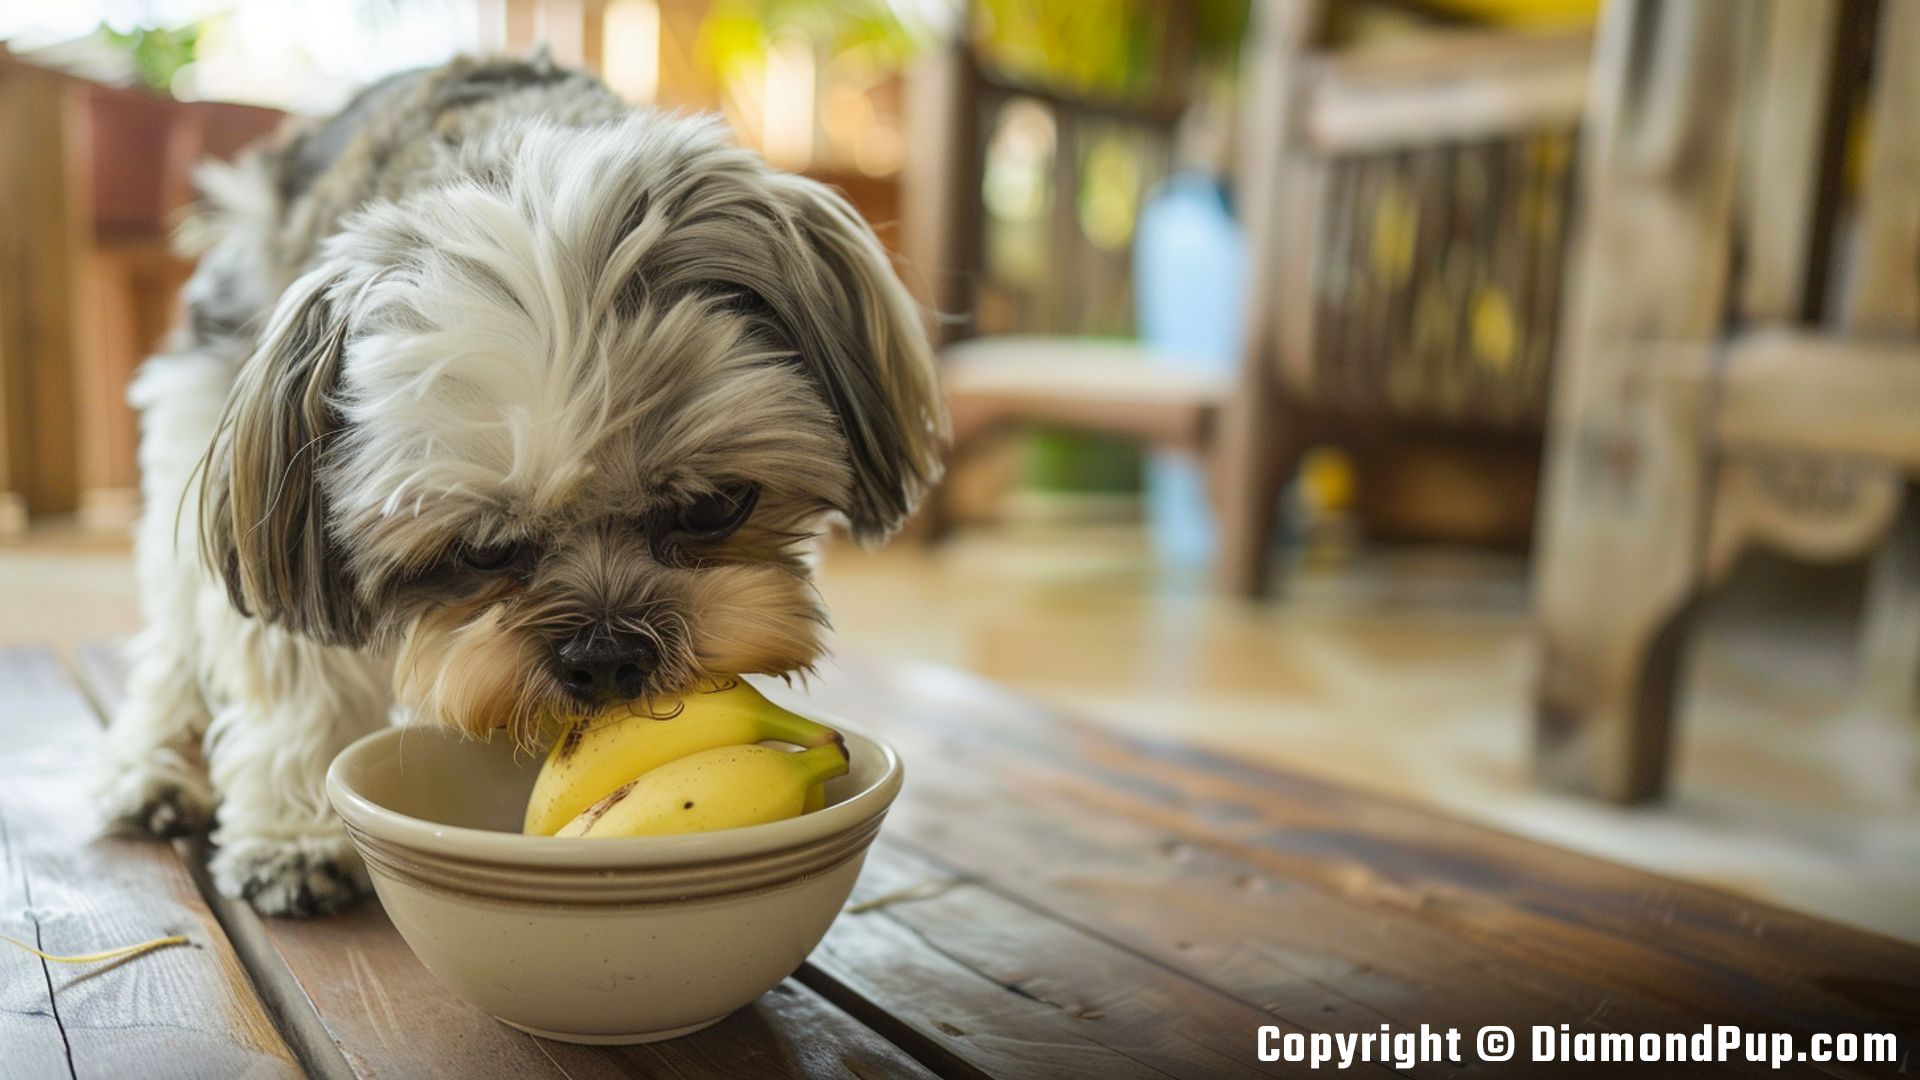 Image of a Cute Shih Tzu Snacking on Banana